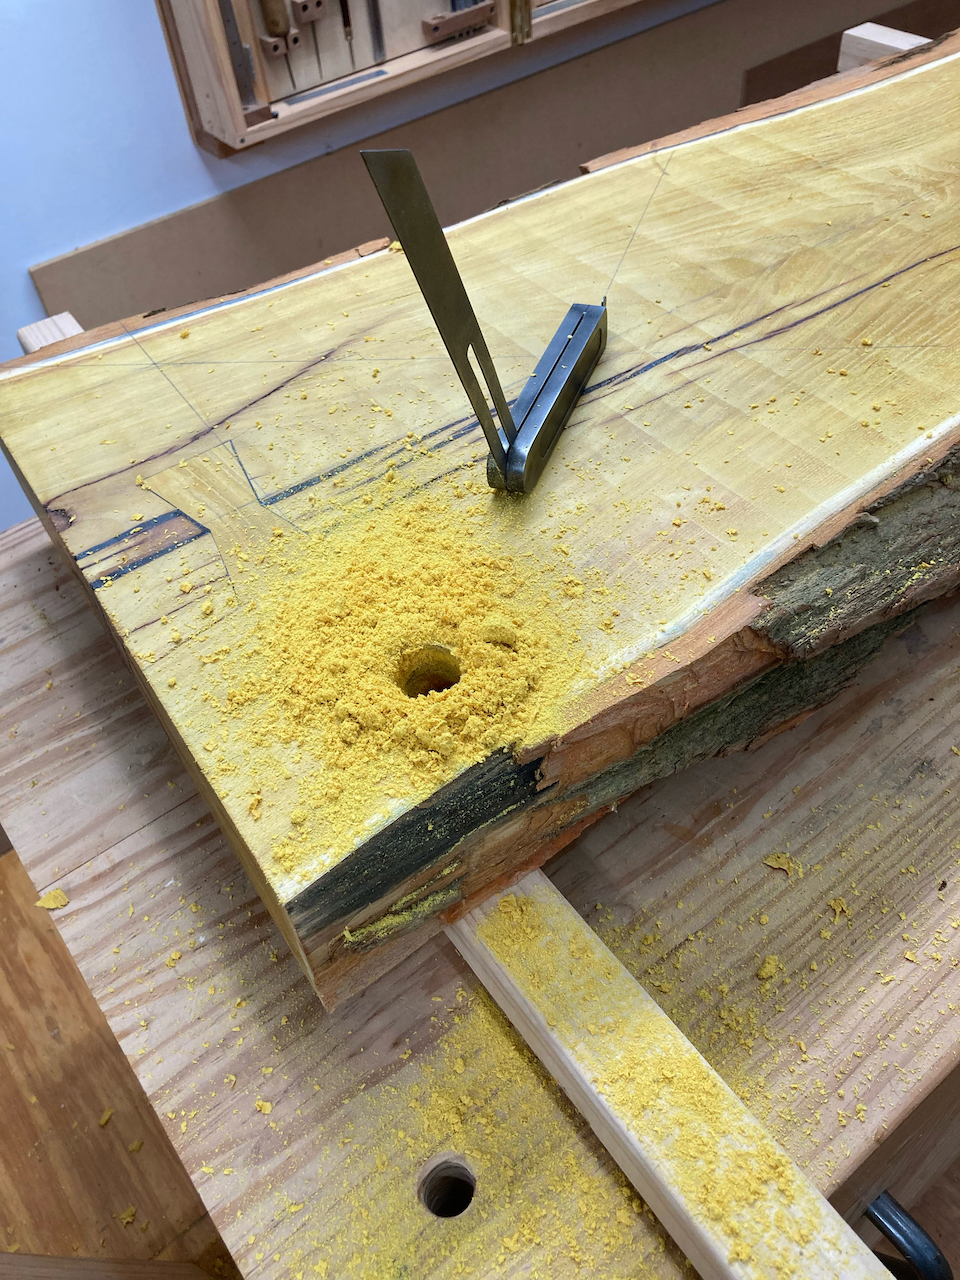 Tough wood to drill through